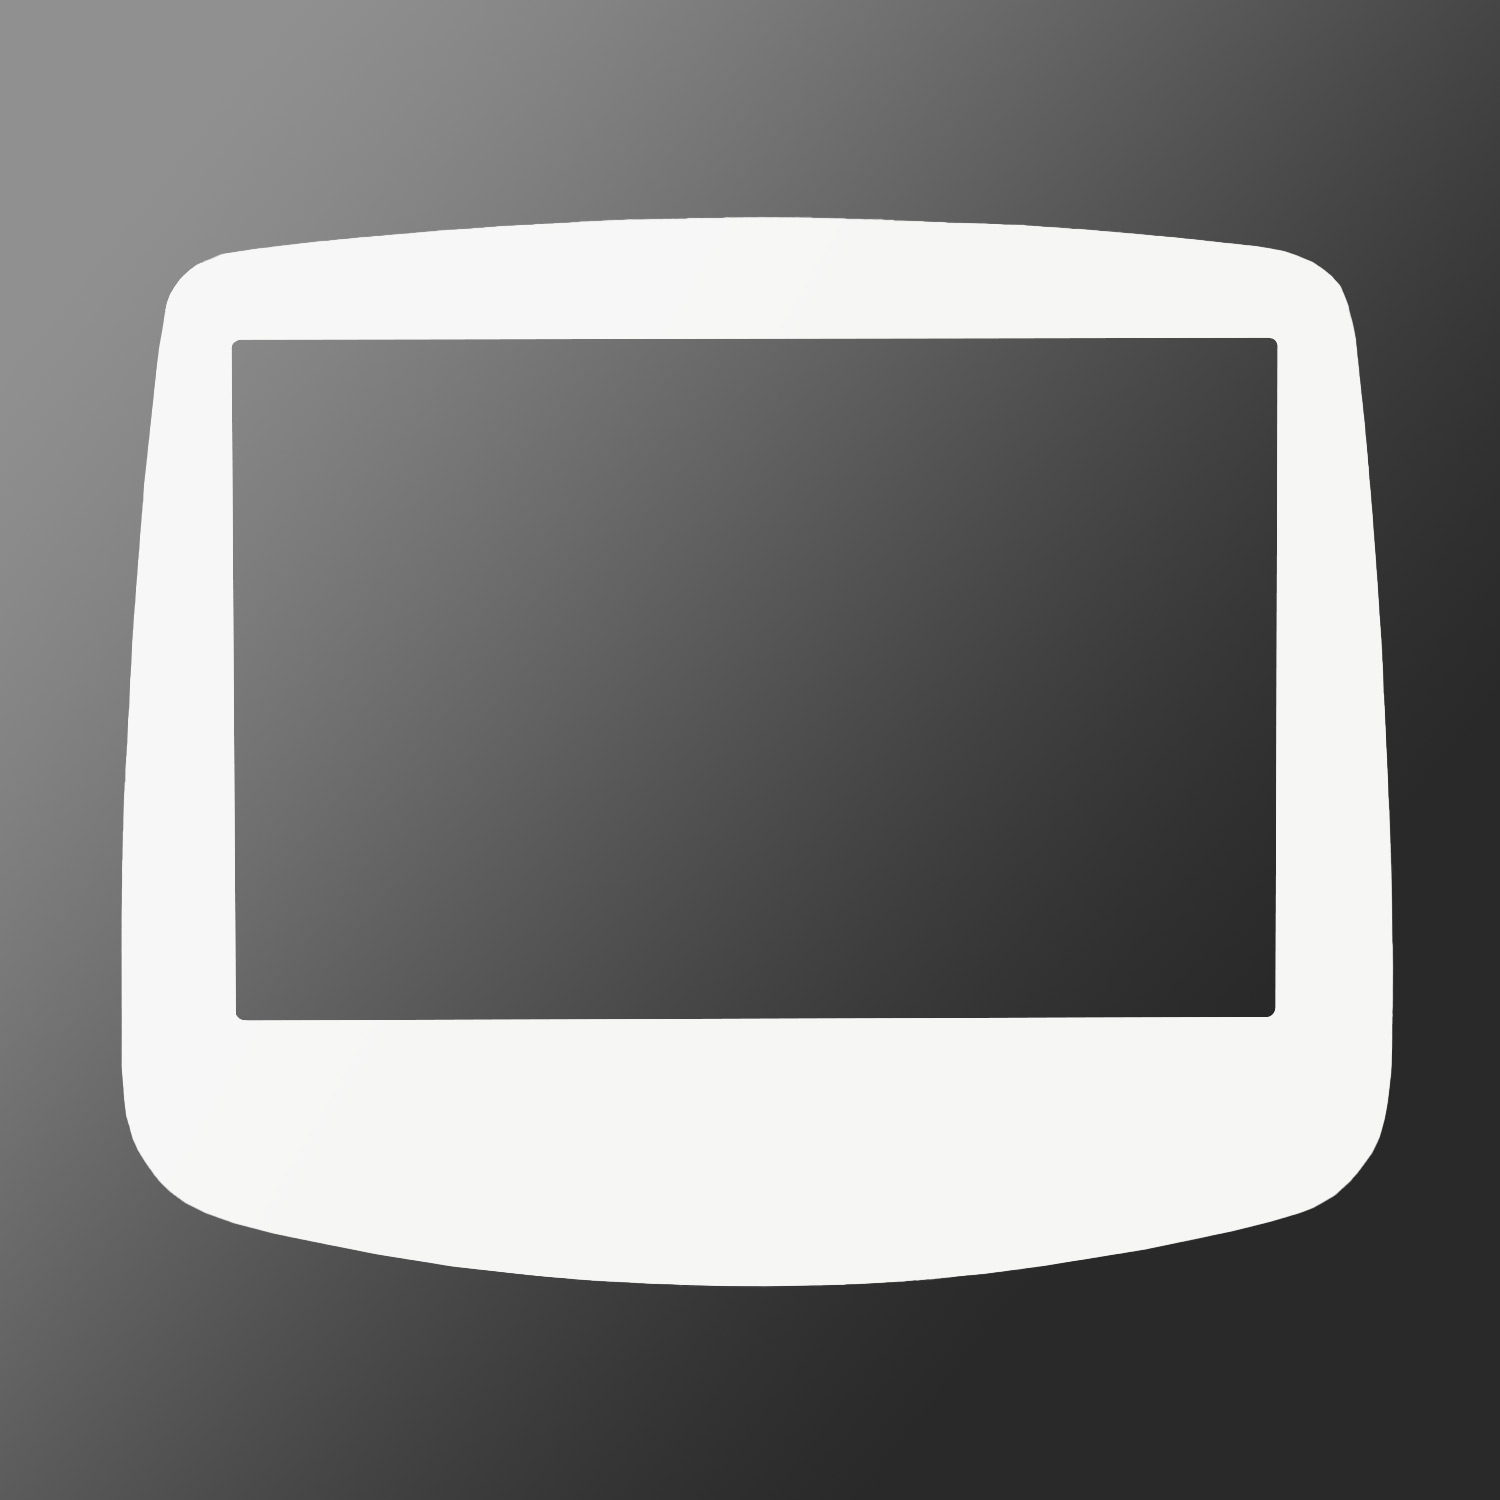 Game Boy Advance glass display pane (White Debrand)